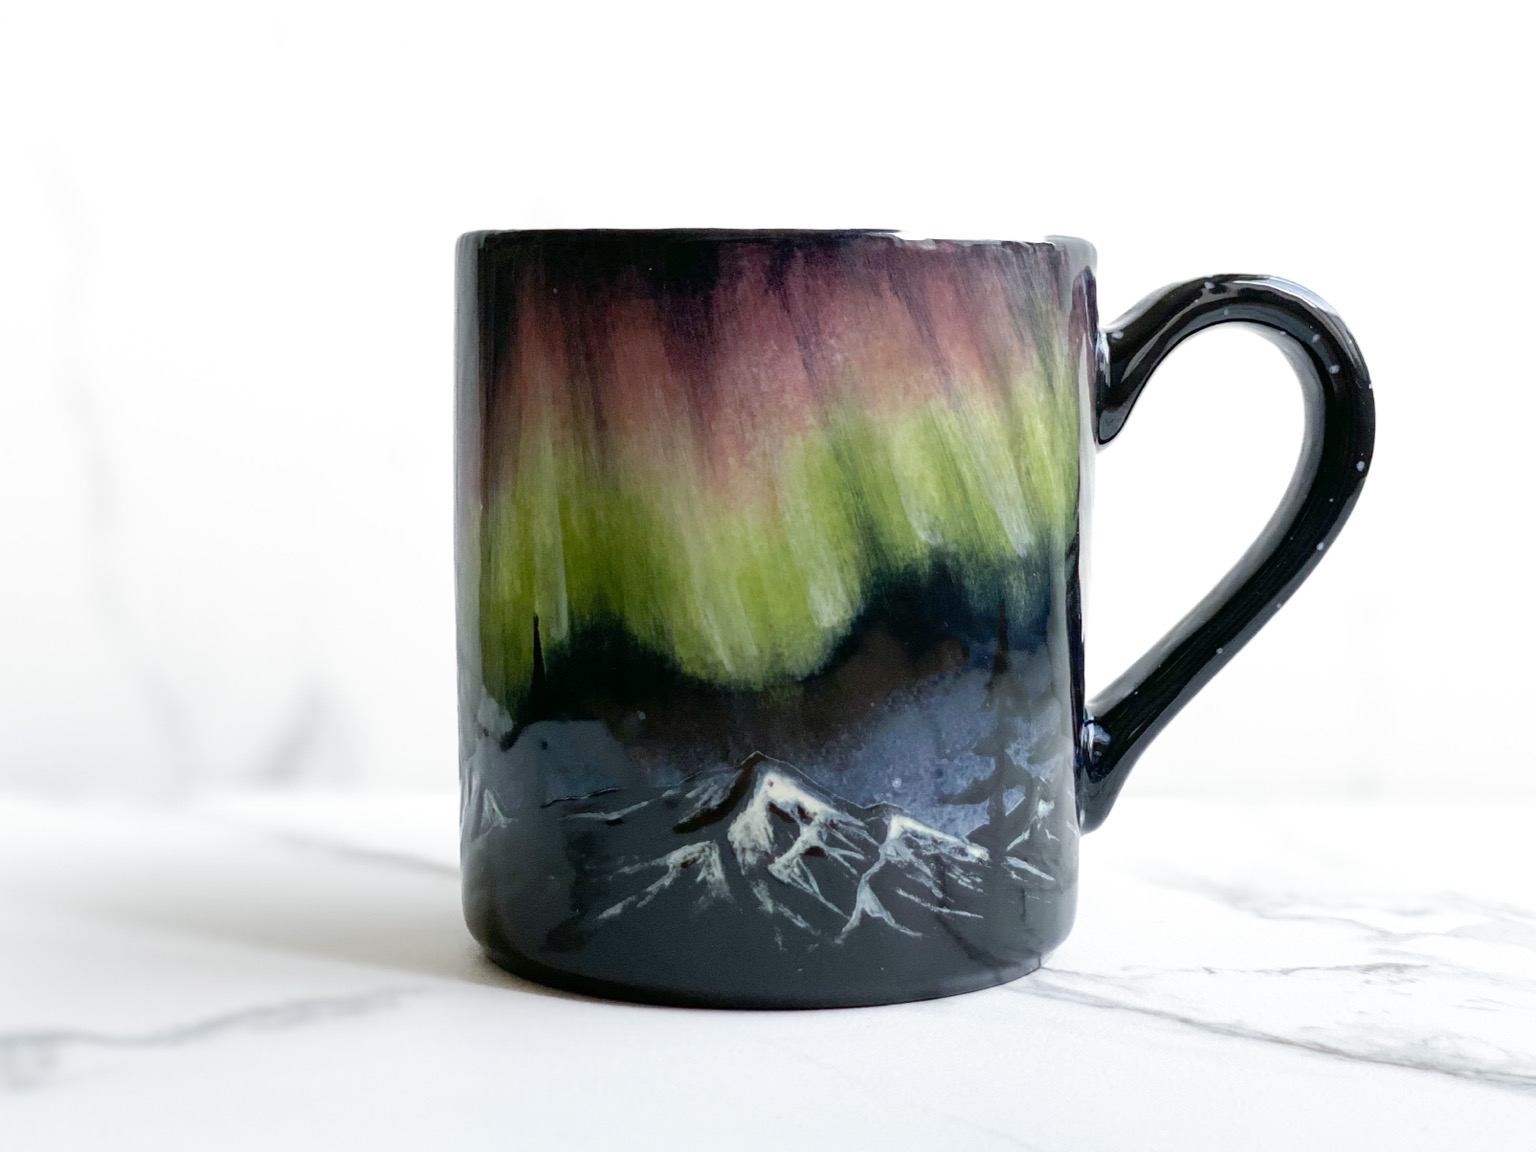 Mug featuring aurora over mountains